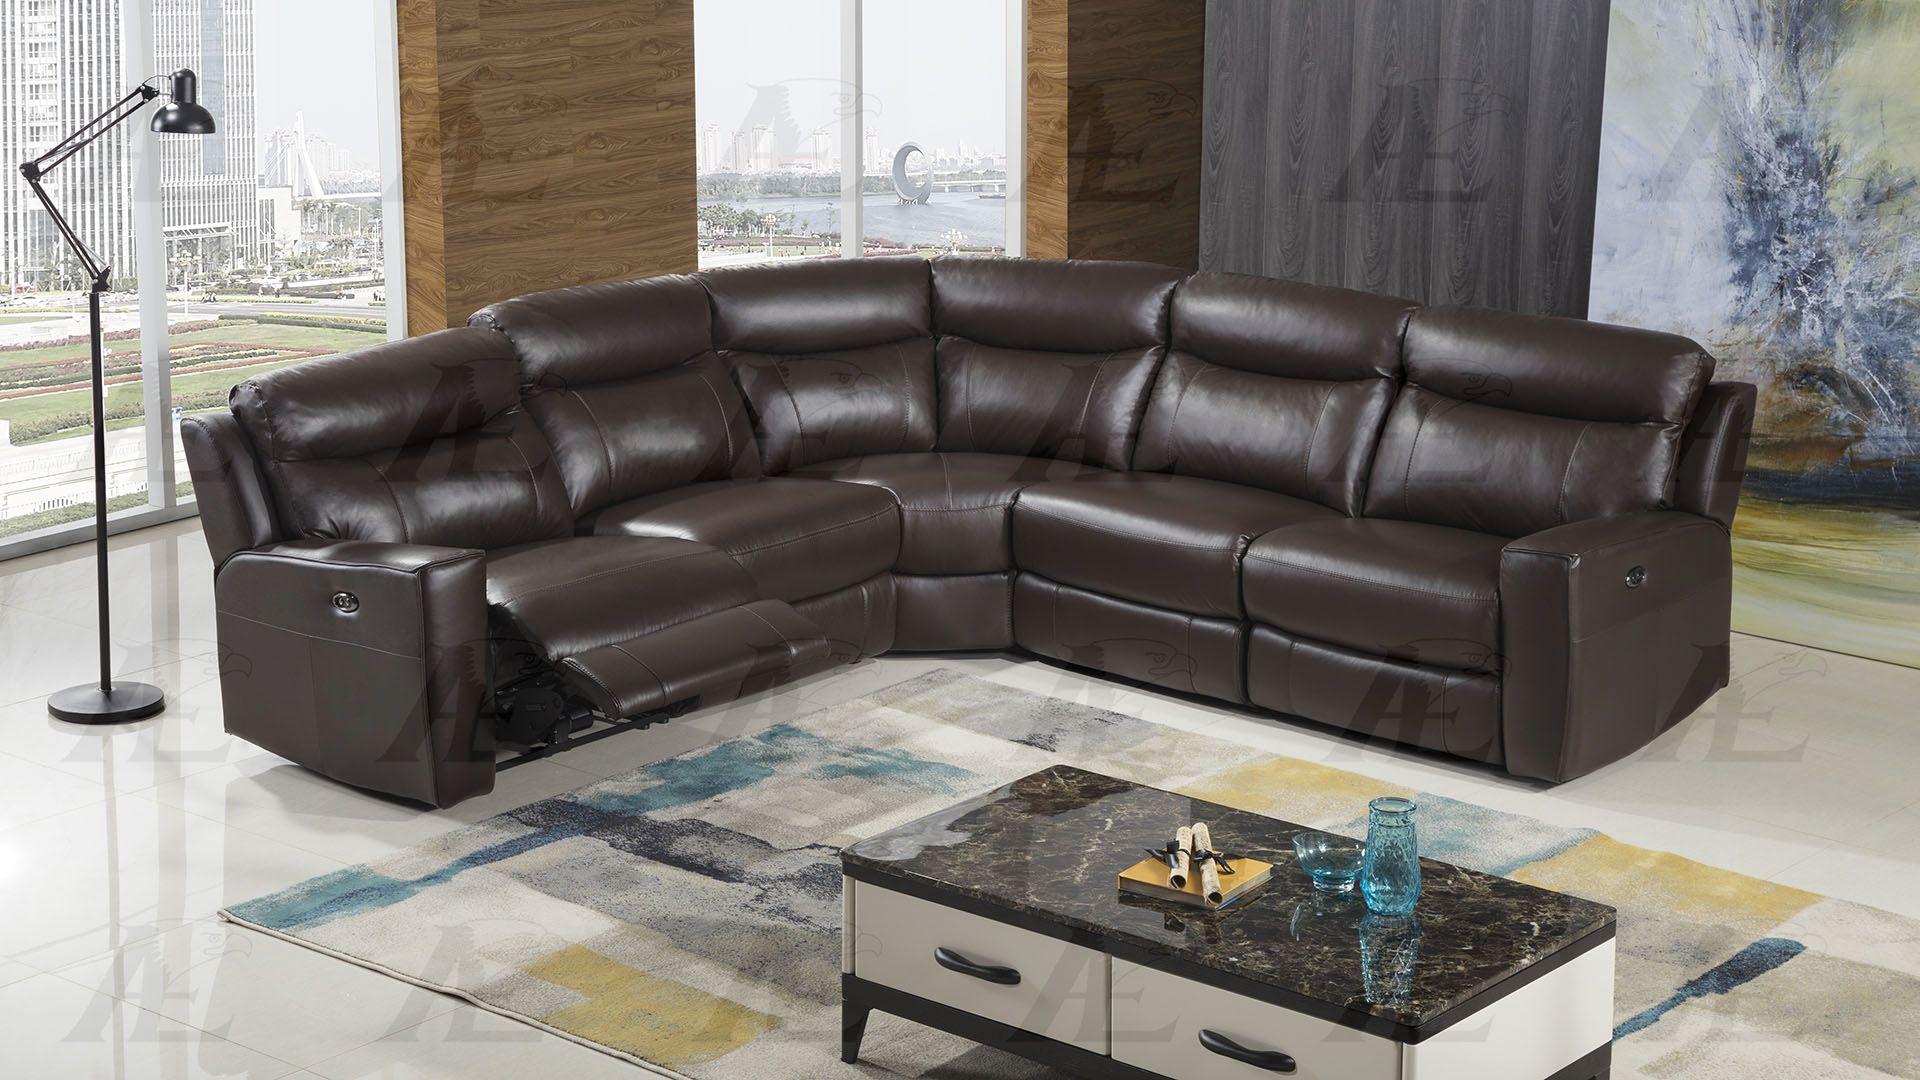 

                    
American Eagle Furniture EK-LH878M-DB Reclining Sectional Dark Brown Top grain leather Purchase 
